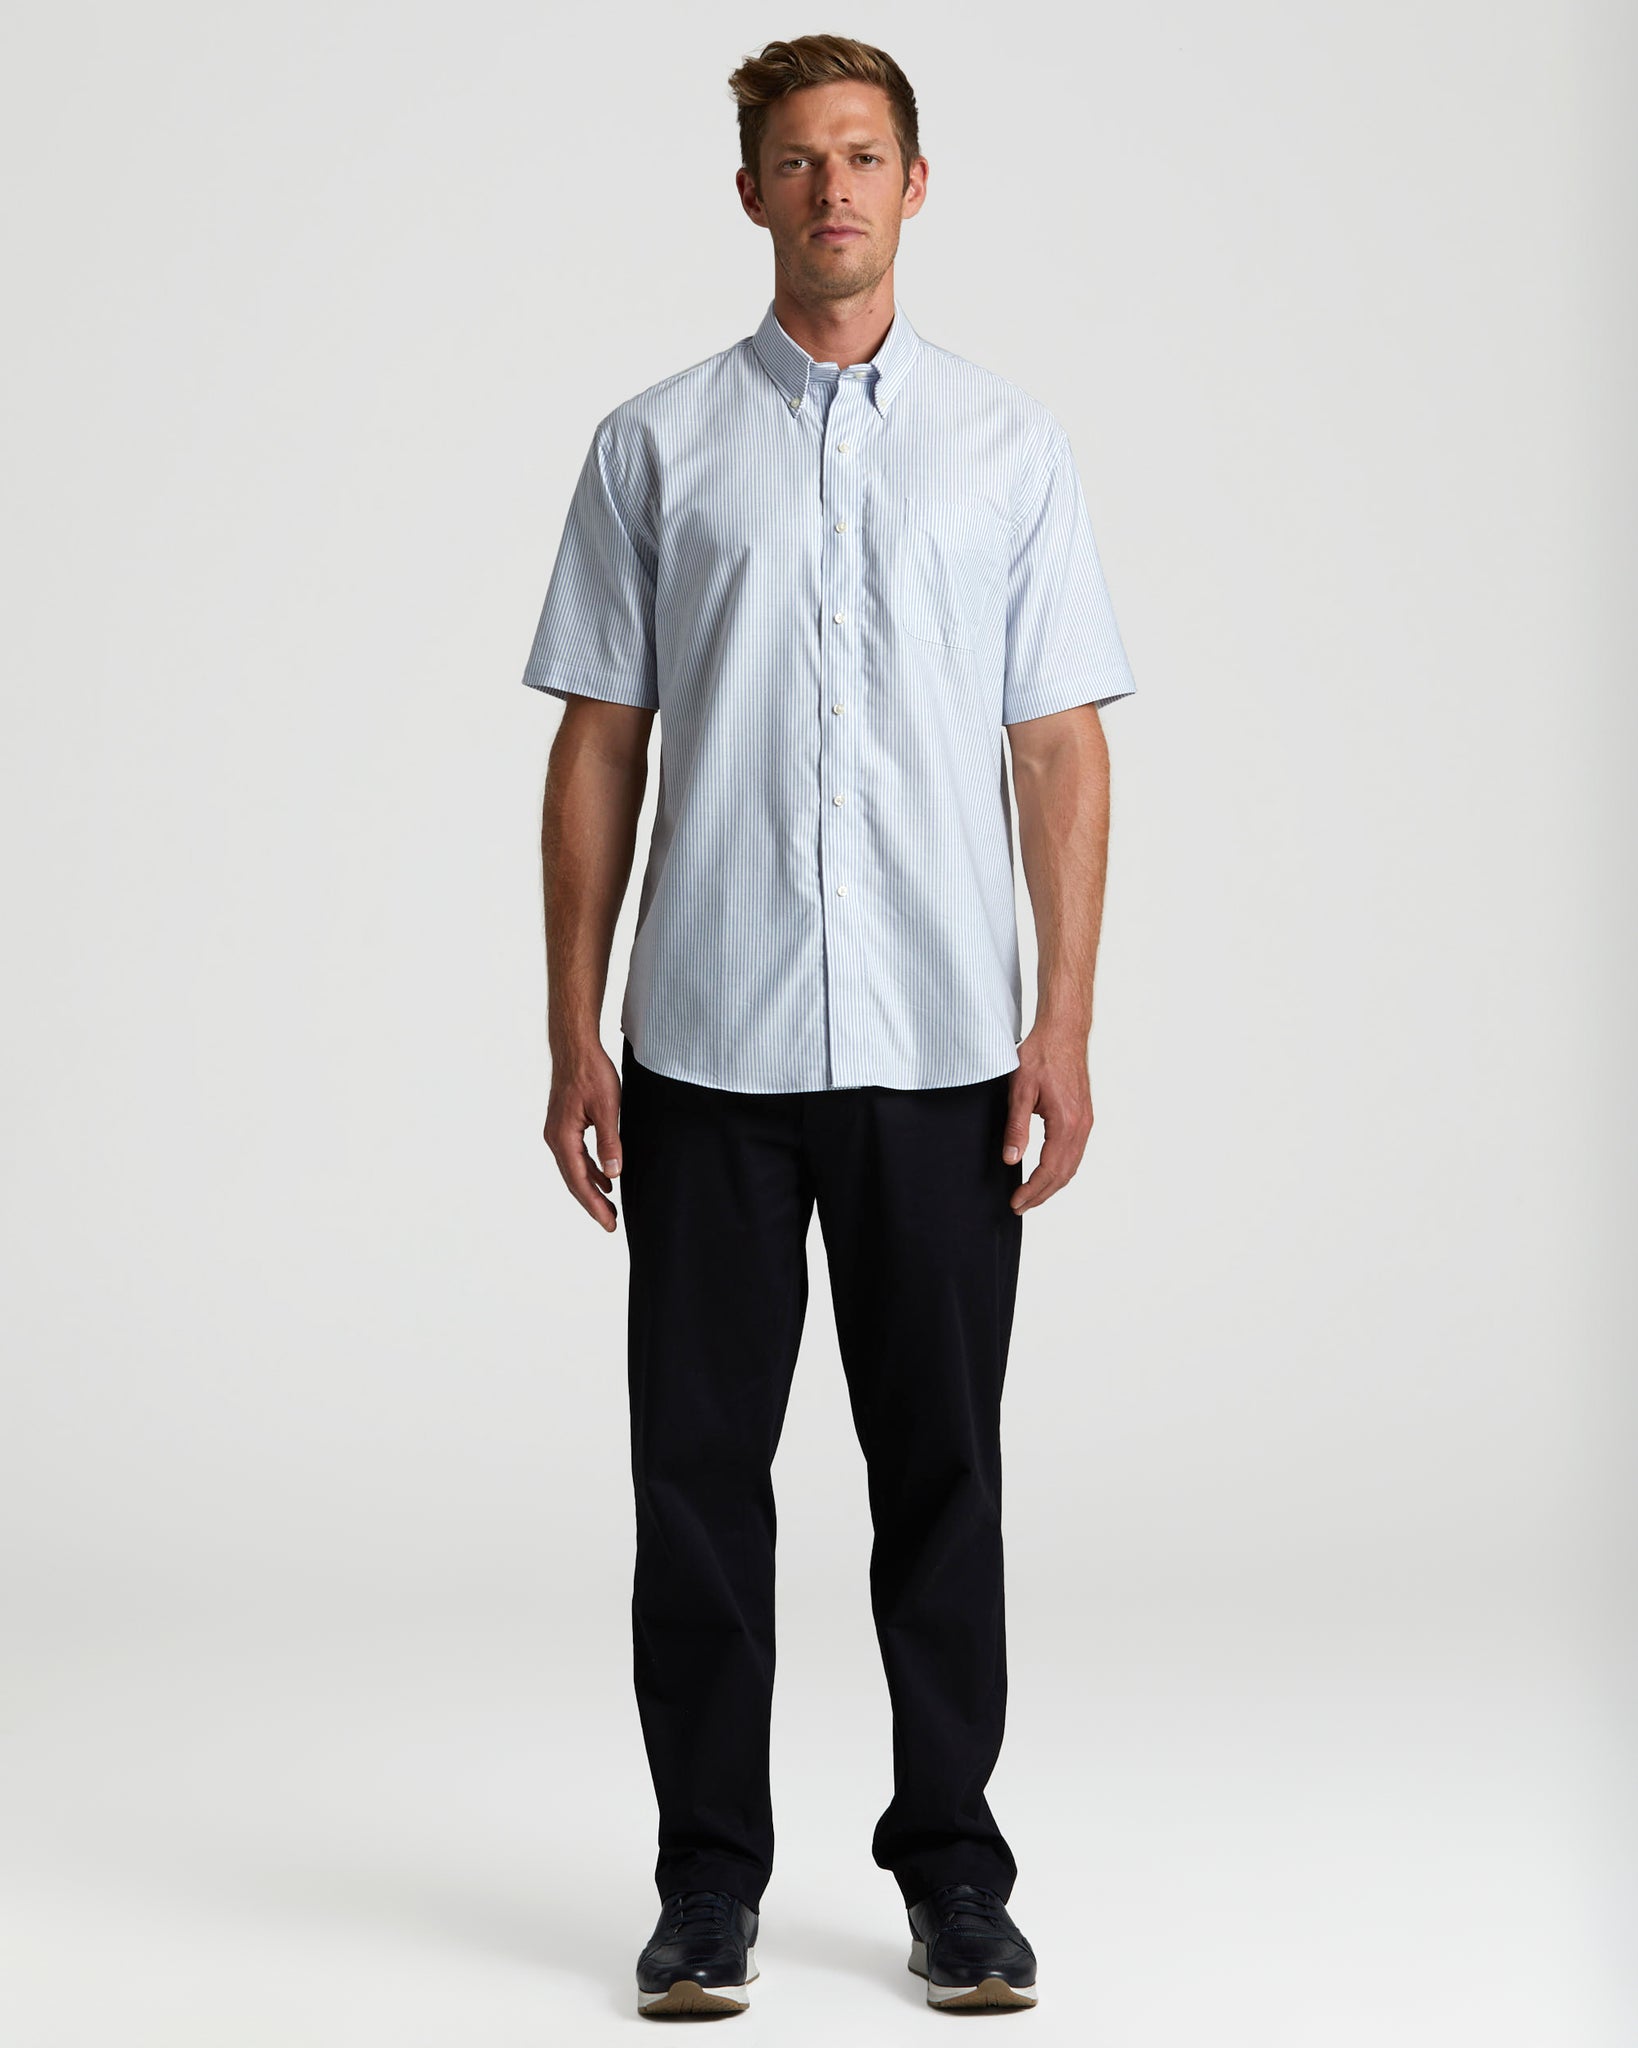 MagnaClick Short Sleeve Stripe Shirt (Mens)